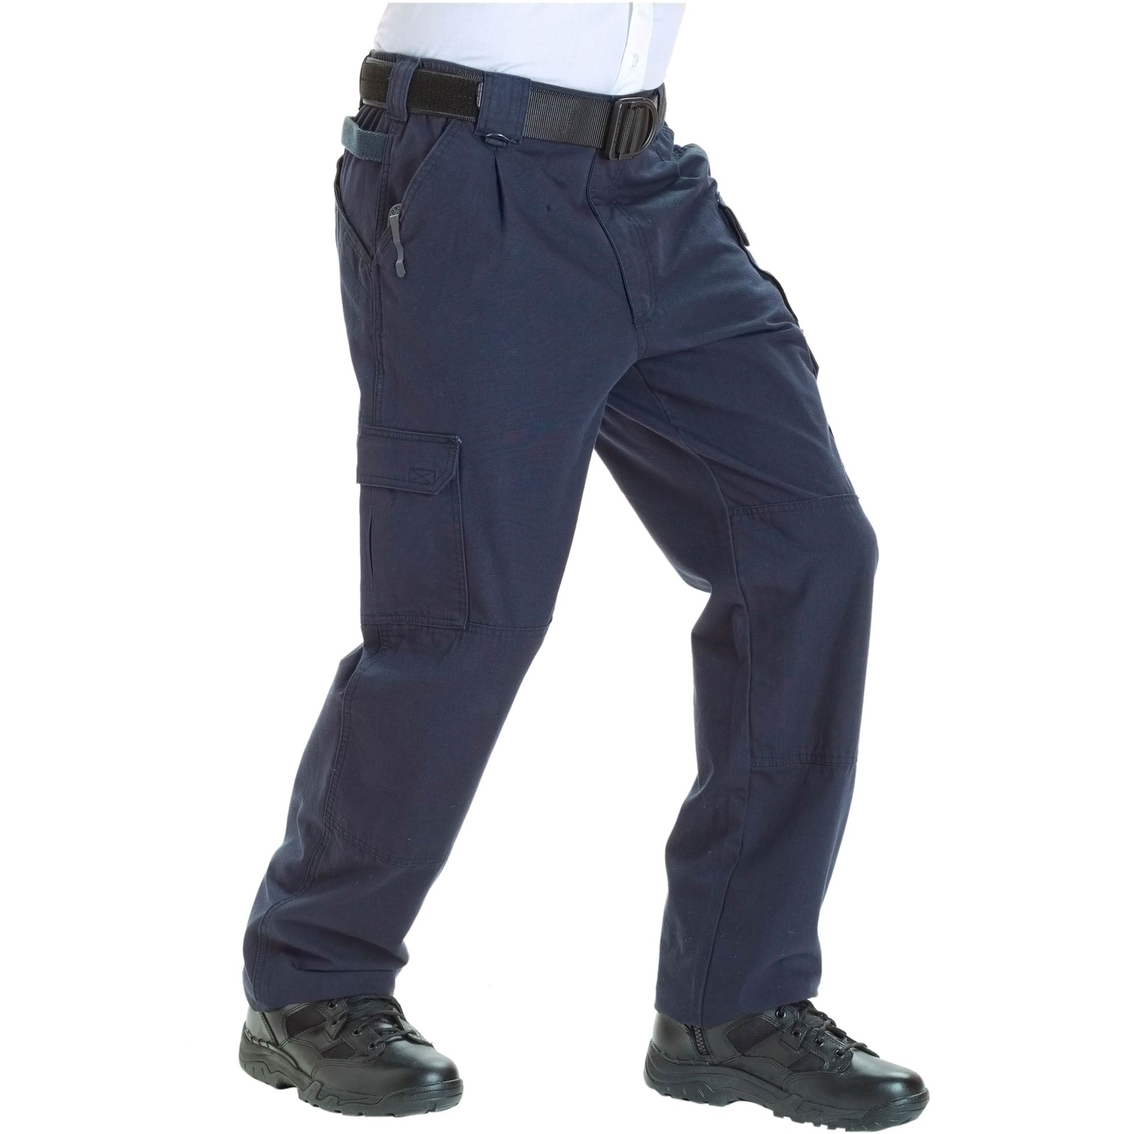 5.11 Tactical Pants | Pants | Clothing & Accessories | Shop The Exchange